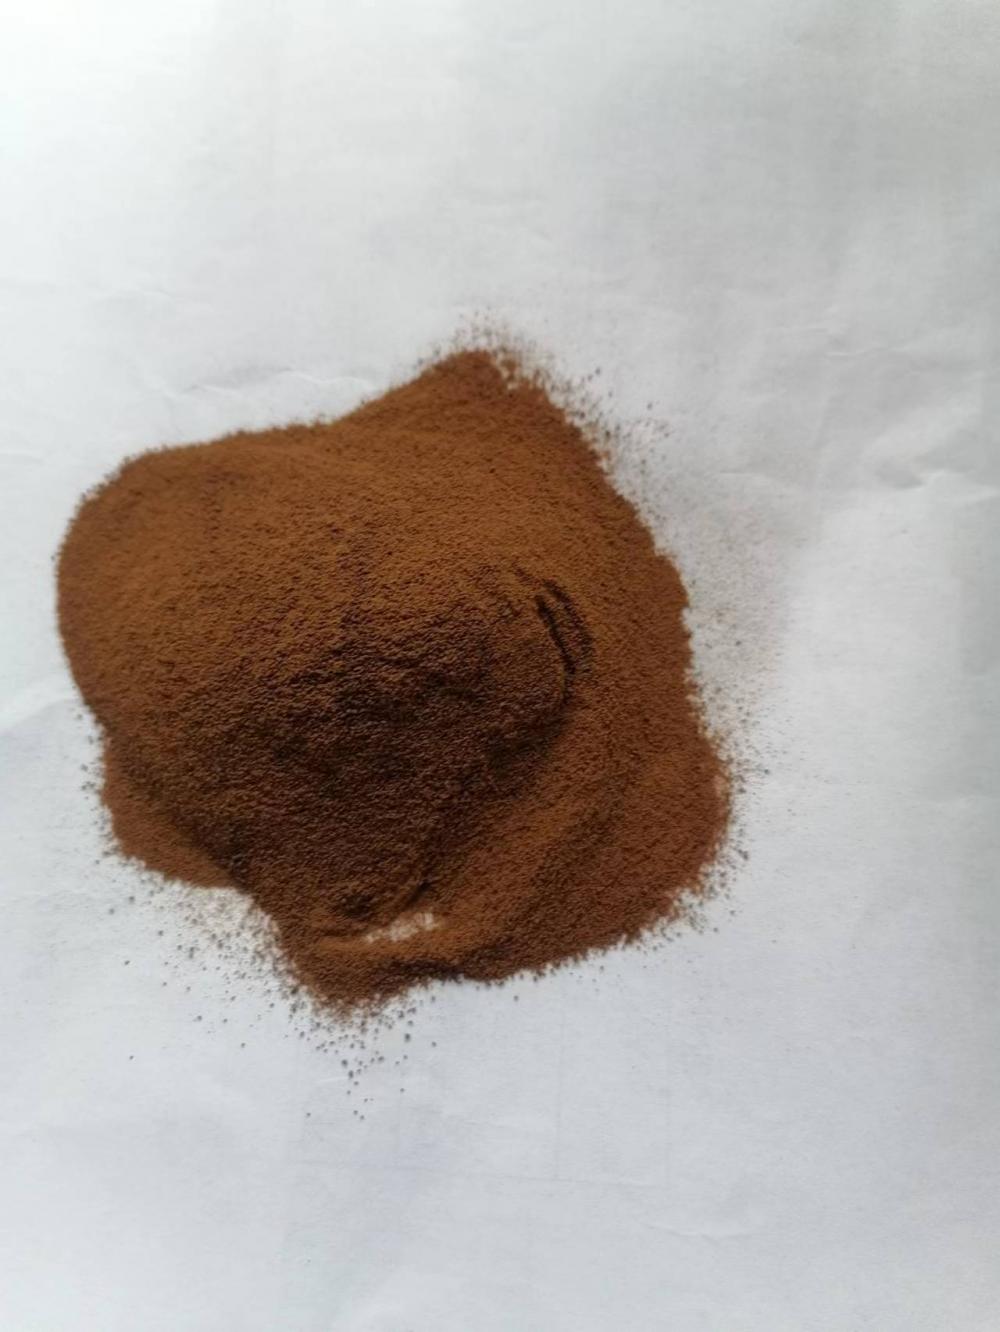 Calcium Lignosulfonate Mineral Powdered Ore Caking Agent